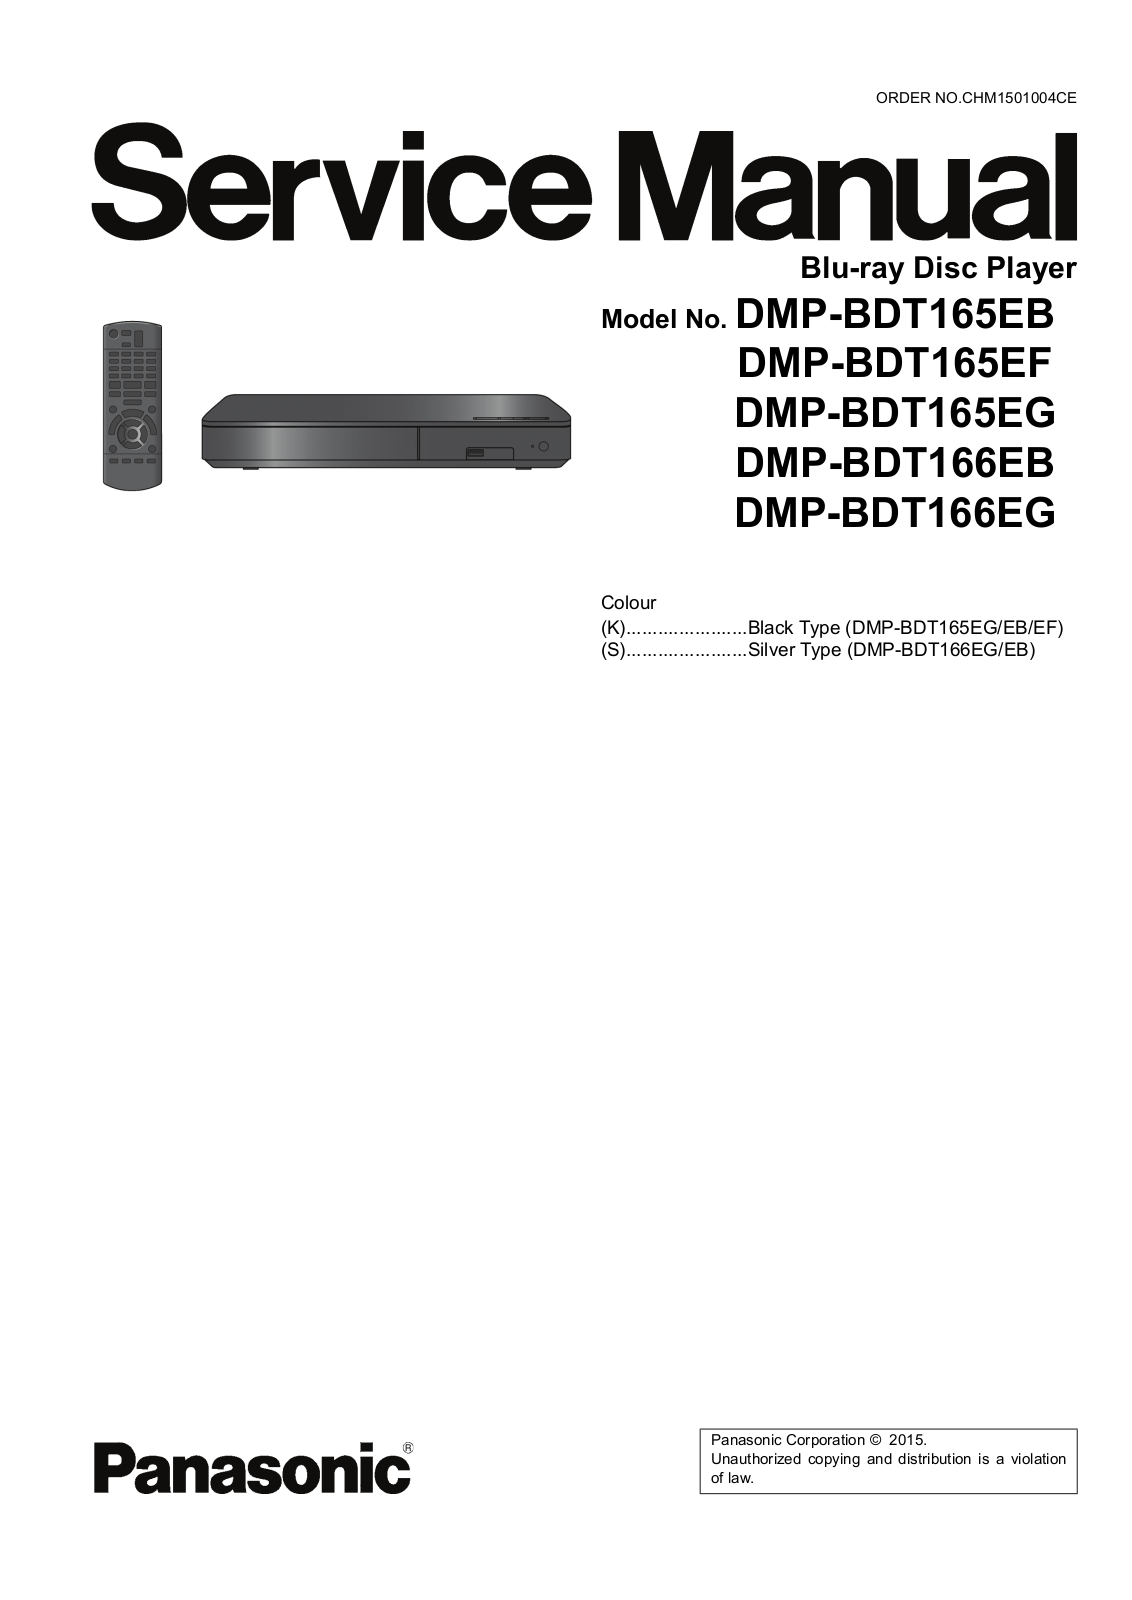 Panasonic DMP-BDT165EB, DMP-BDT165EF, DMP-BDT165EG, DMP-BDT166EB, DMP-BDT166EG Service Manual